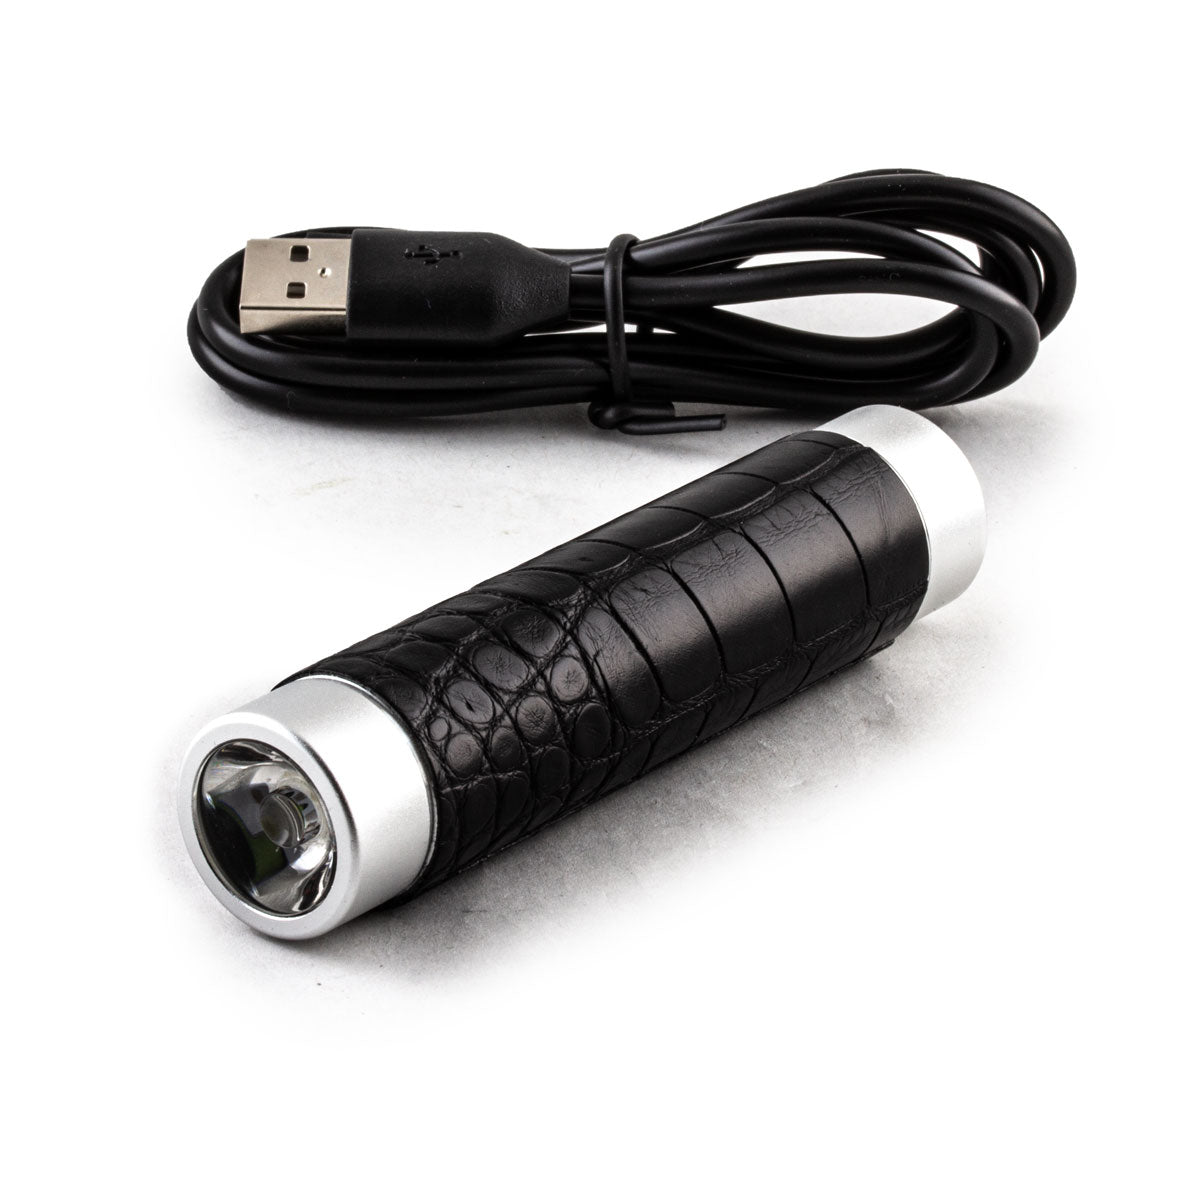 Mini external battery & flashlights - Alligator - Universal charger iPhone,  Samsung, smartphone, tablet  (black, brown, gray)